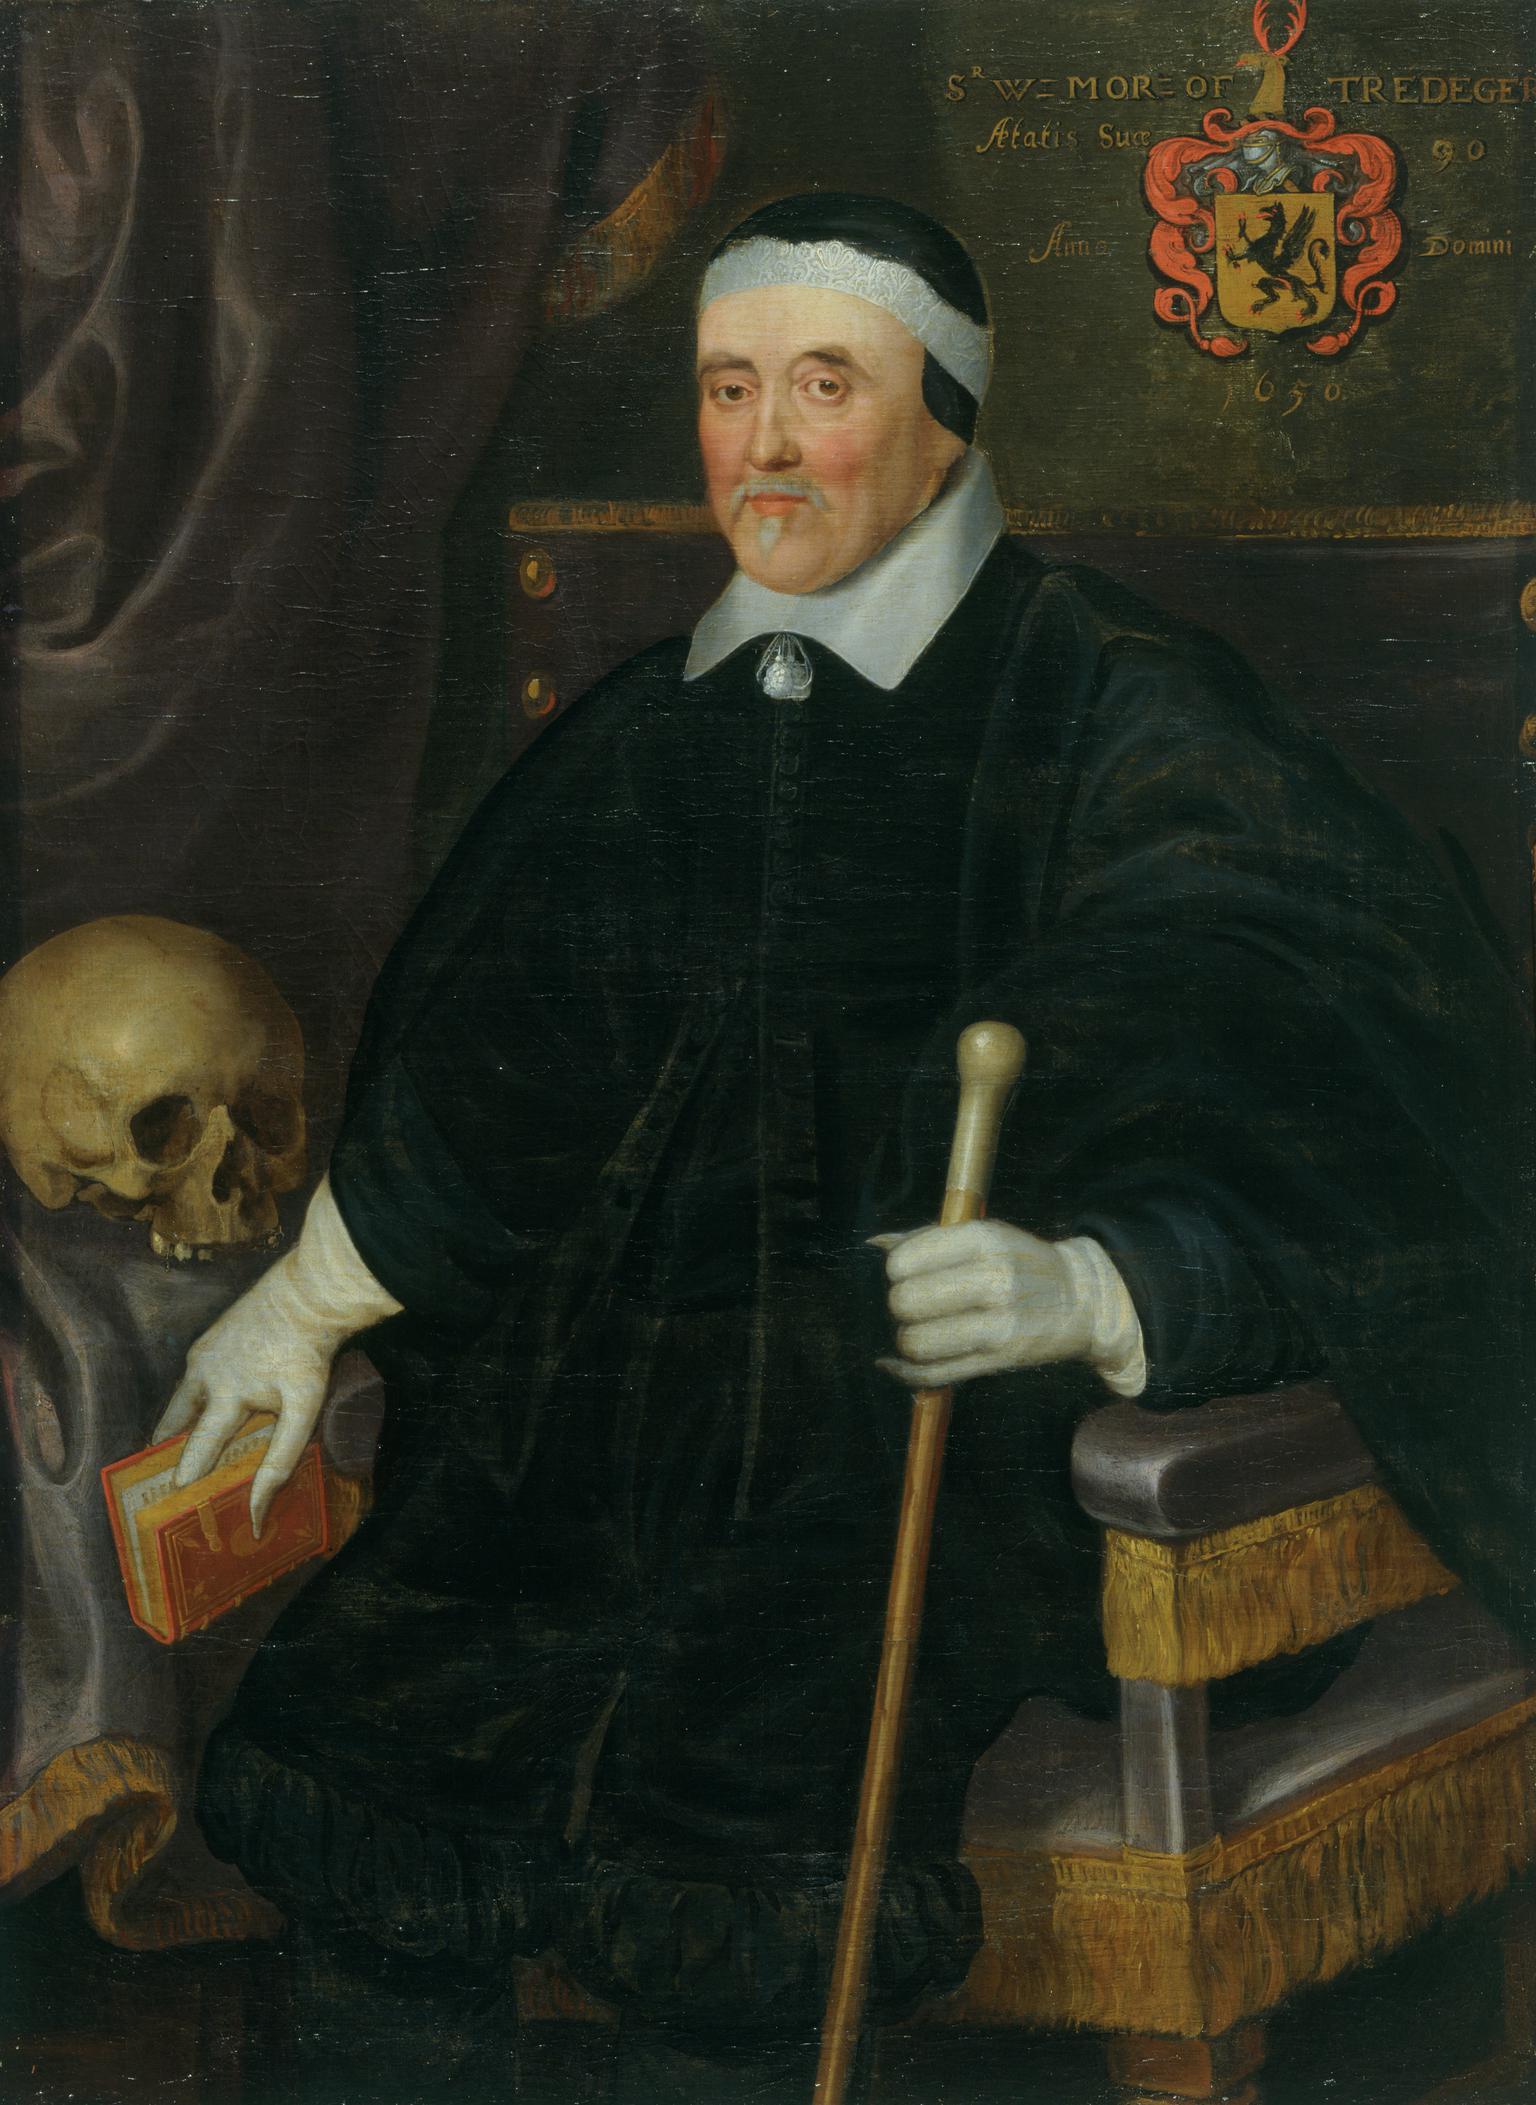 Sir William Morgan (1567-1652)